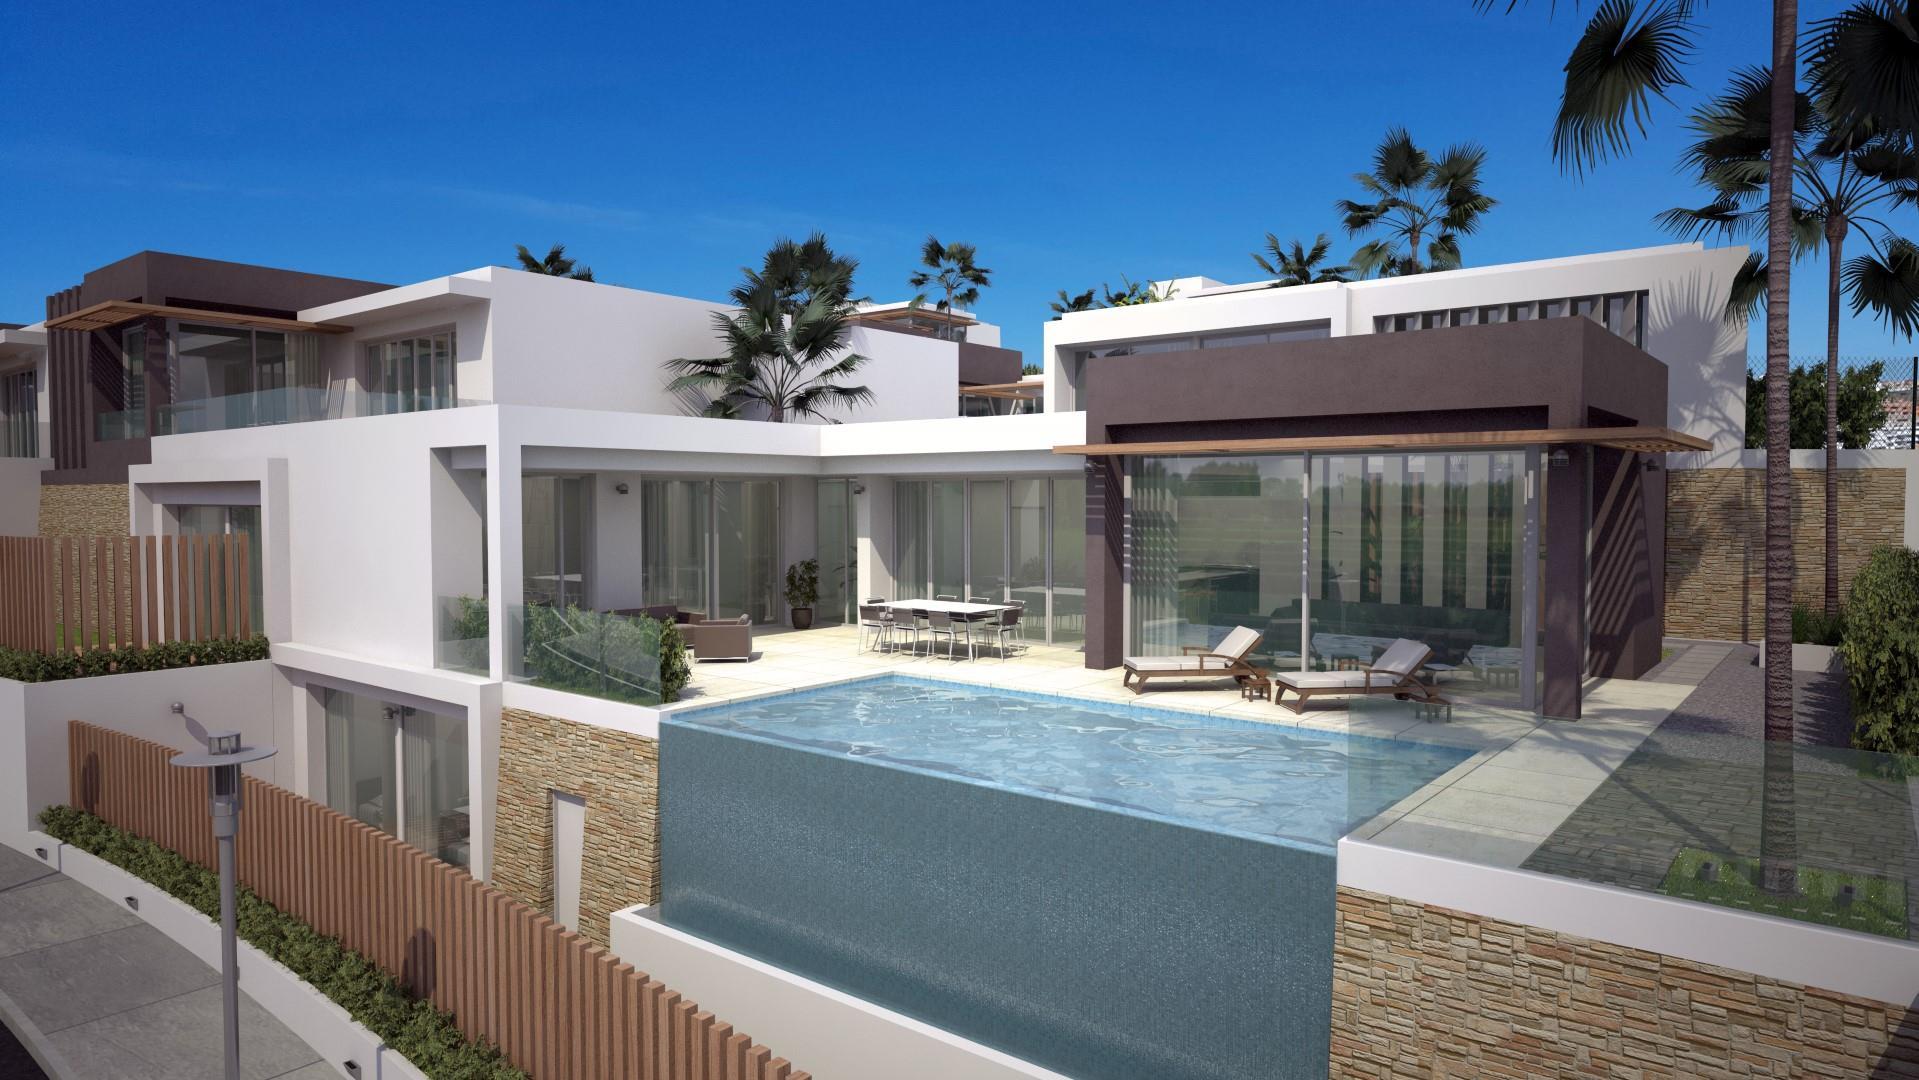 3 bedroom house / villa for sale in Riviera del Sol, Costa del Sol